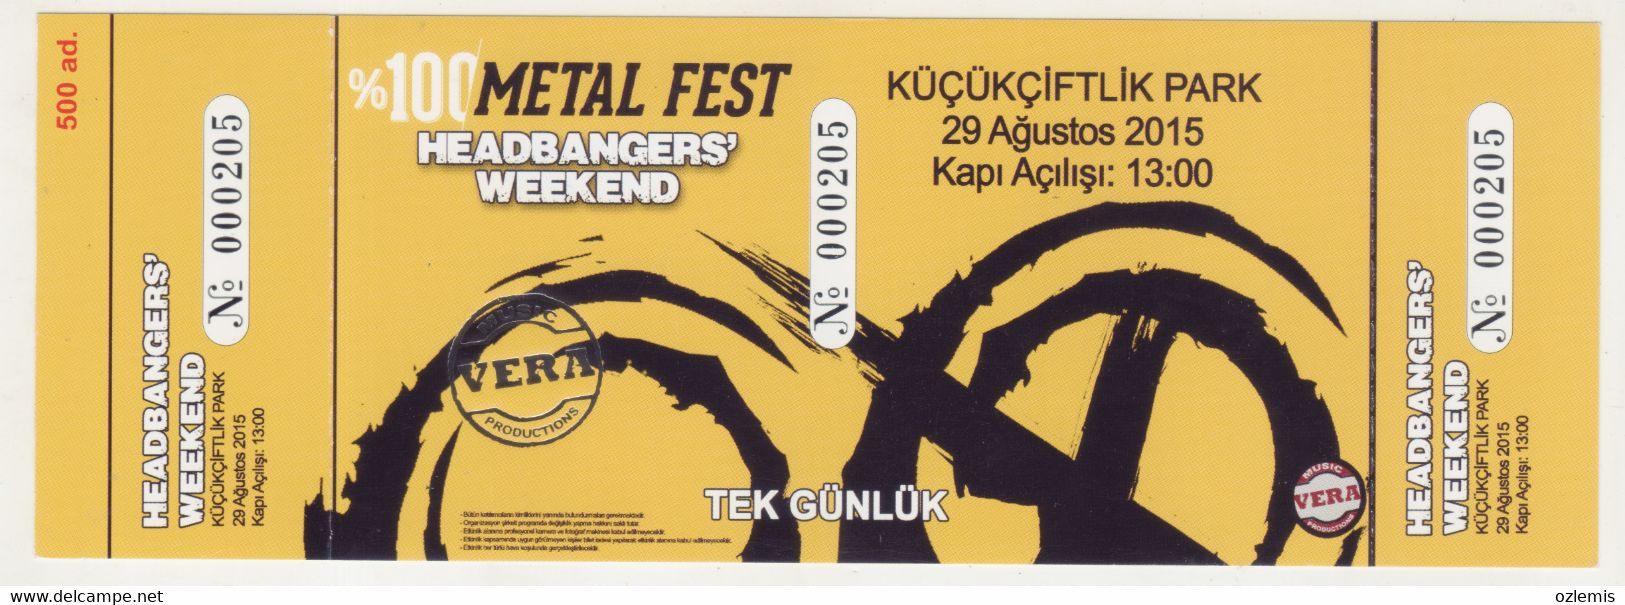 HEADBANGERS' WEEKEND,%100 METAL FEST 2015 TICKET ISTANBUL TURKEY - Concert Tickets